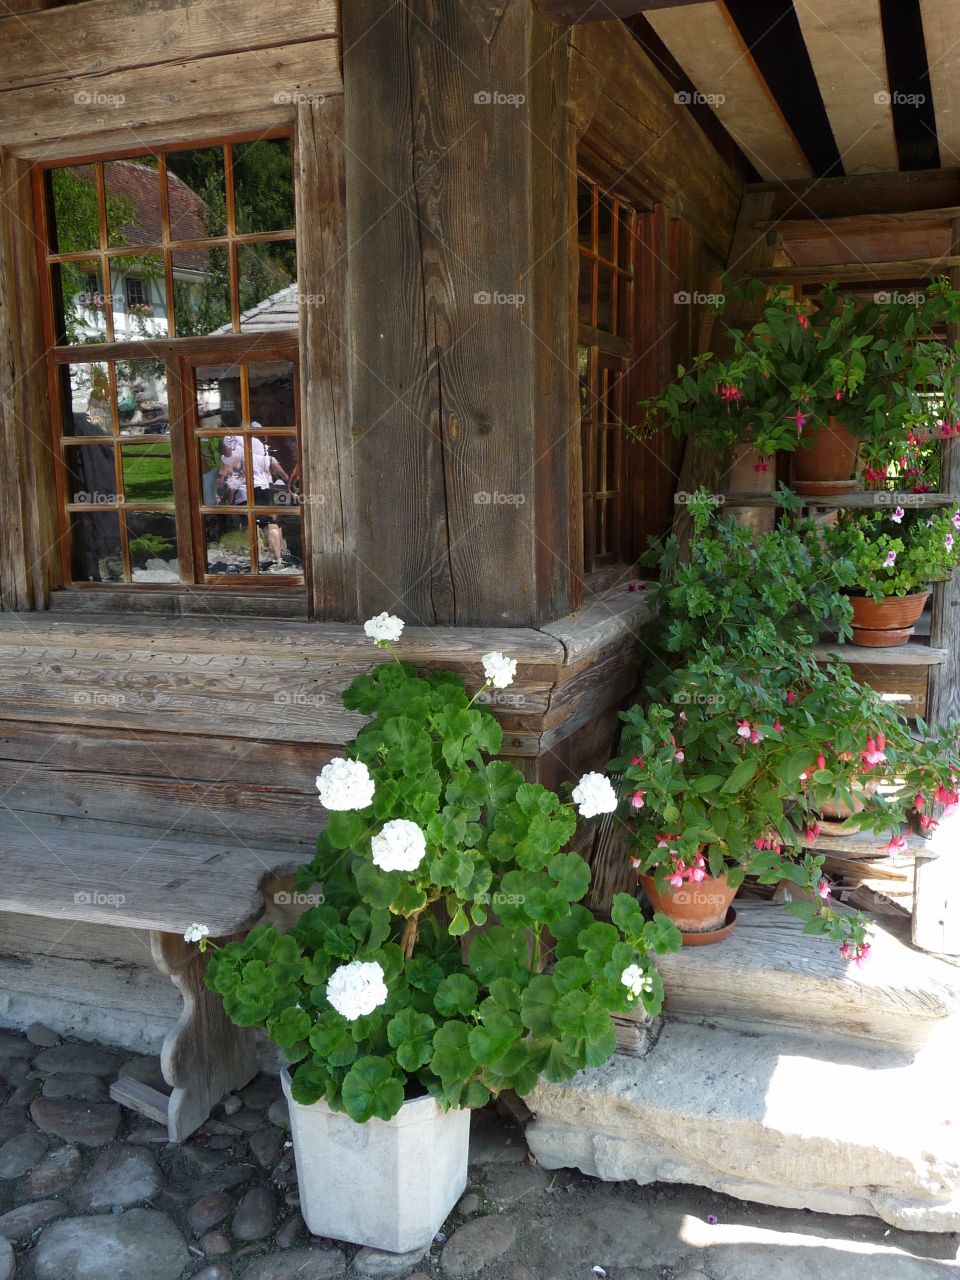 Farm house with flowers